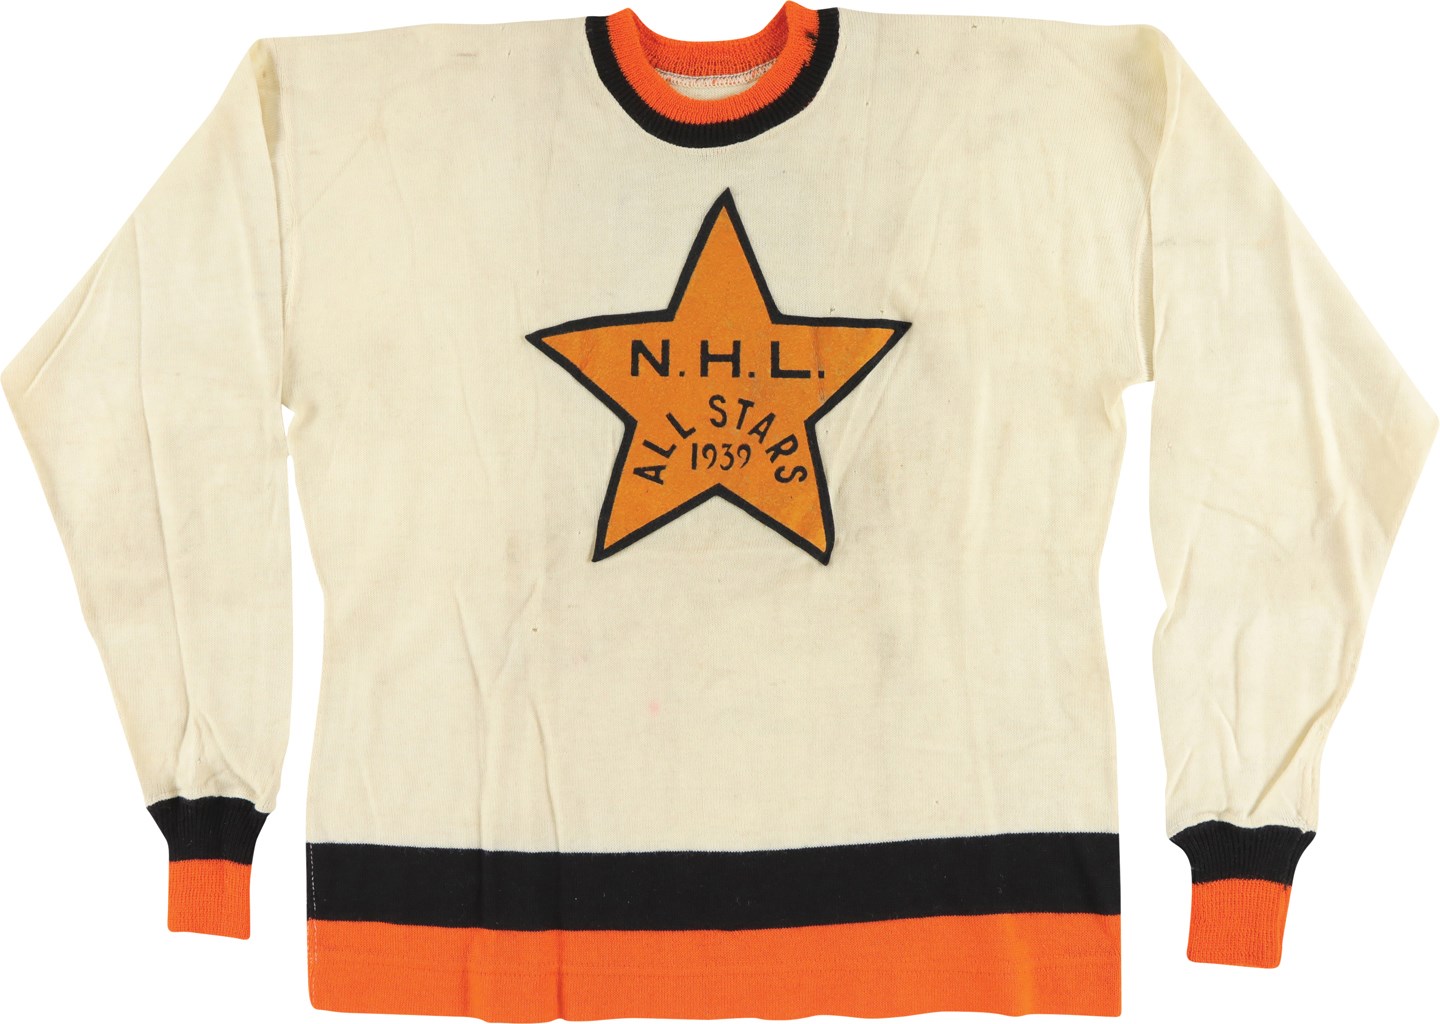 Hockey - 1939 Johnny Gottselig All-Star Game Worn Jersey